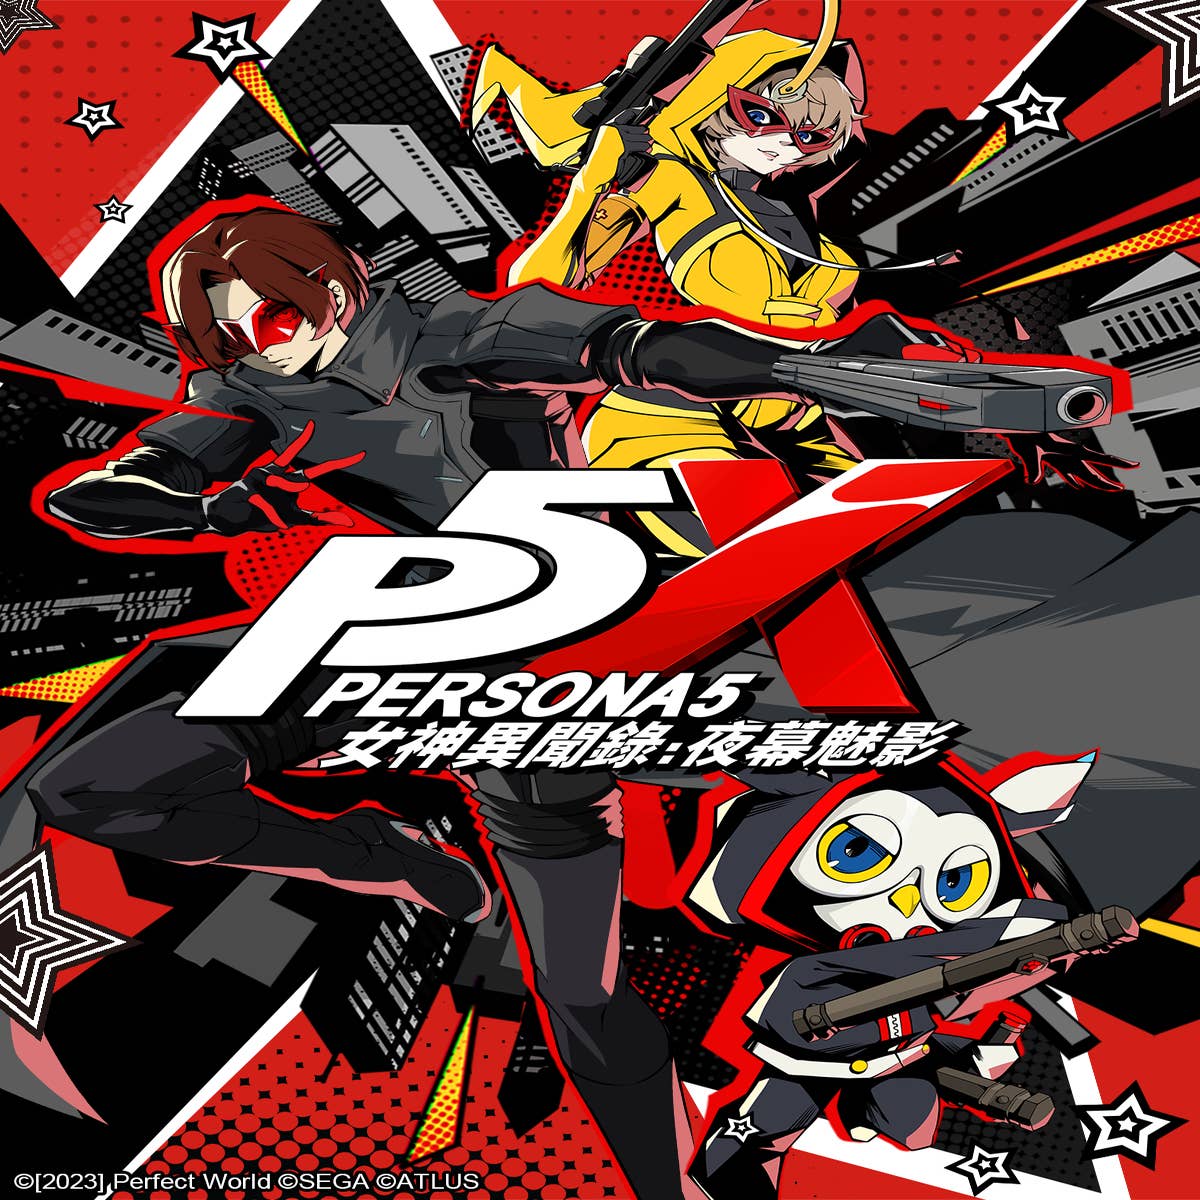 Persona 5 The Phantom X - Closer Poster by VelvetZone